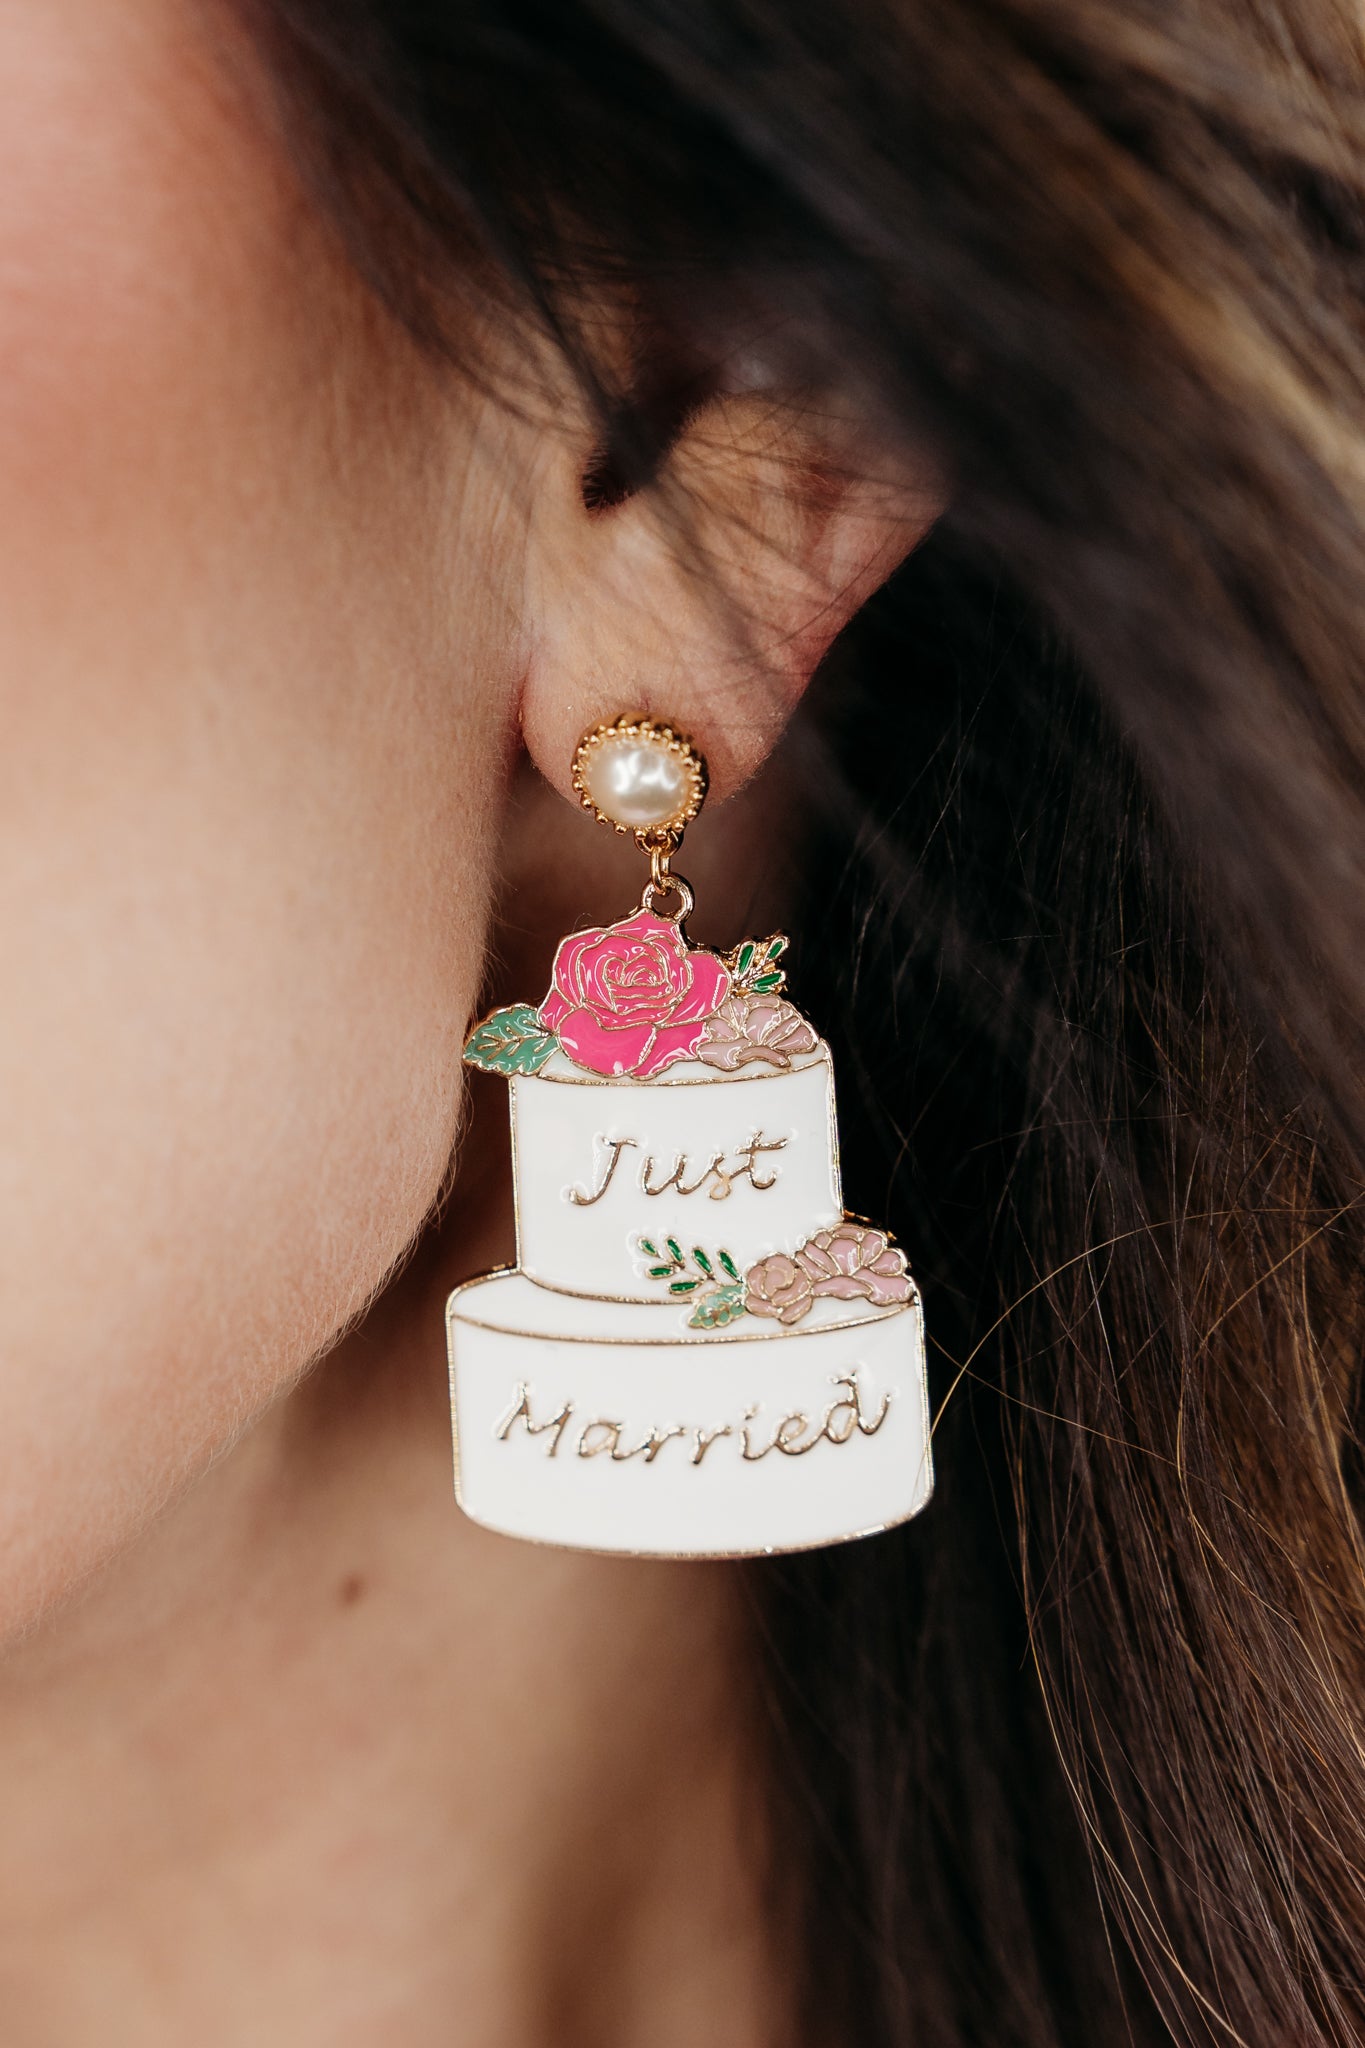 Just Married Wedding Cake Earring